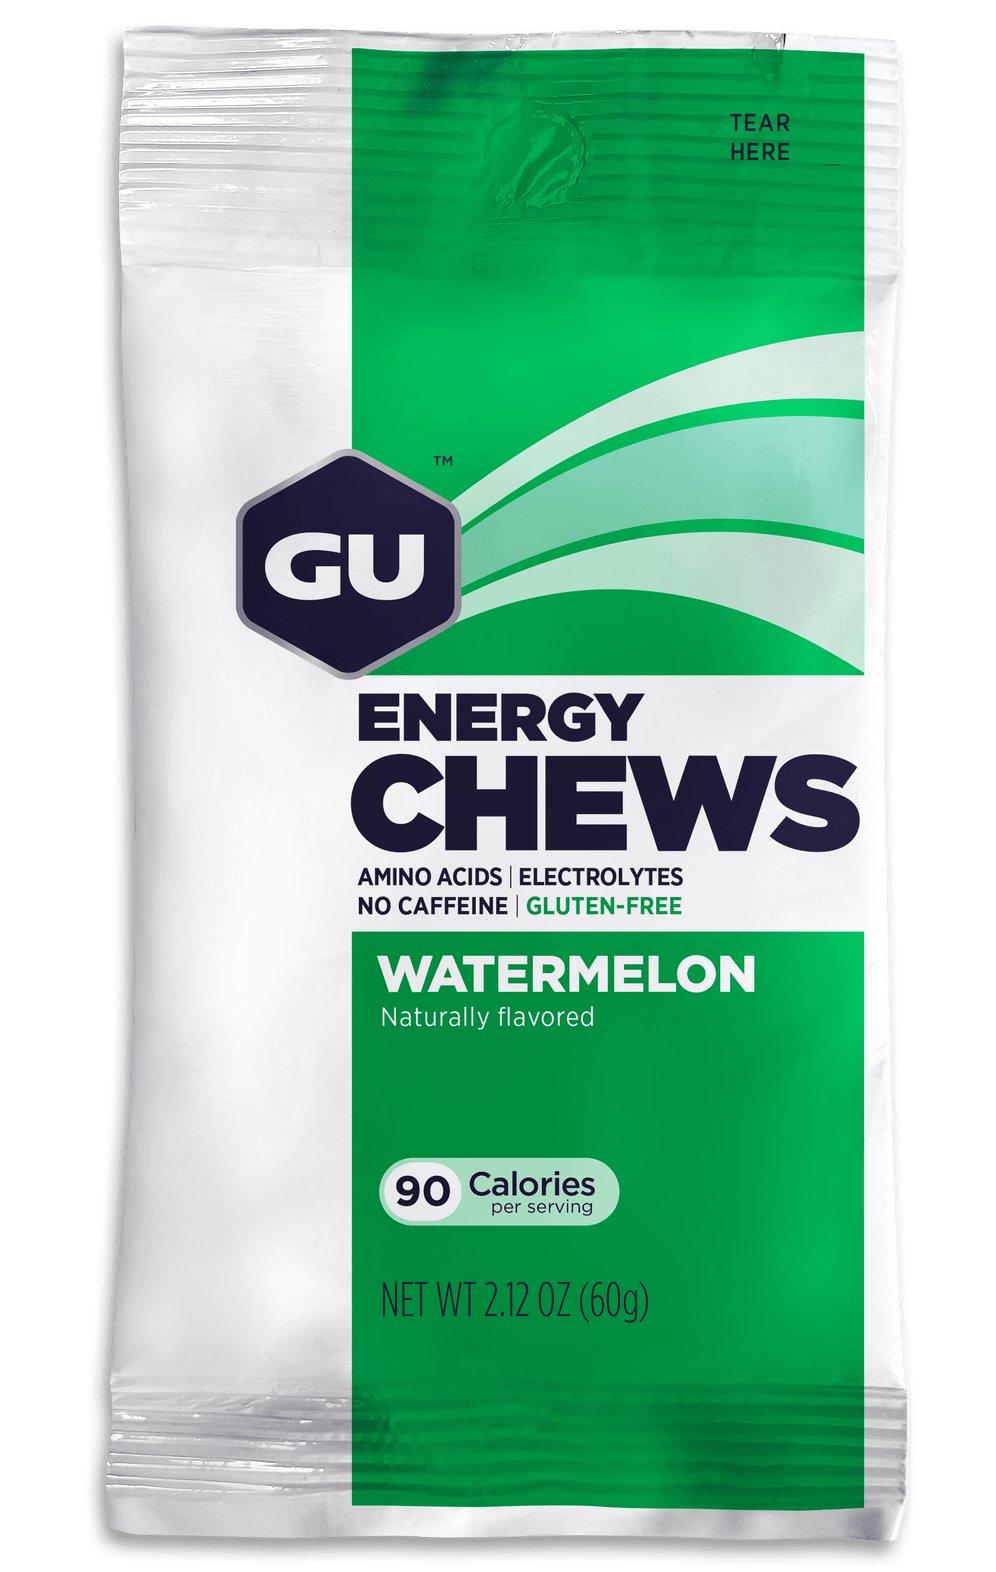 Watermelon Energy Chews